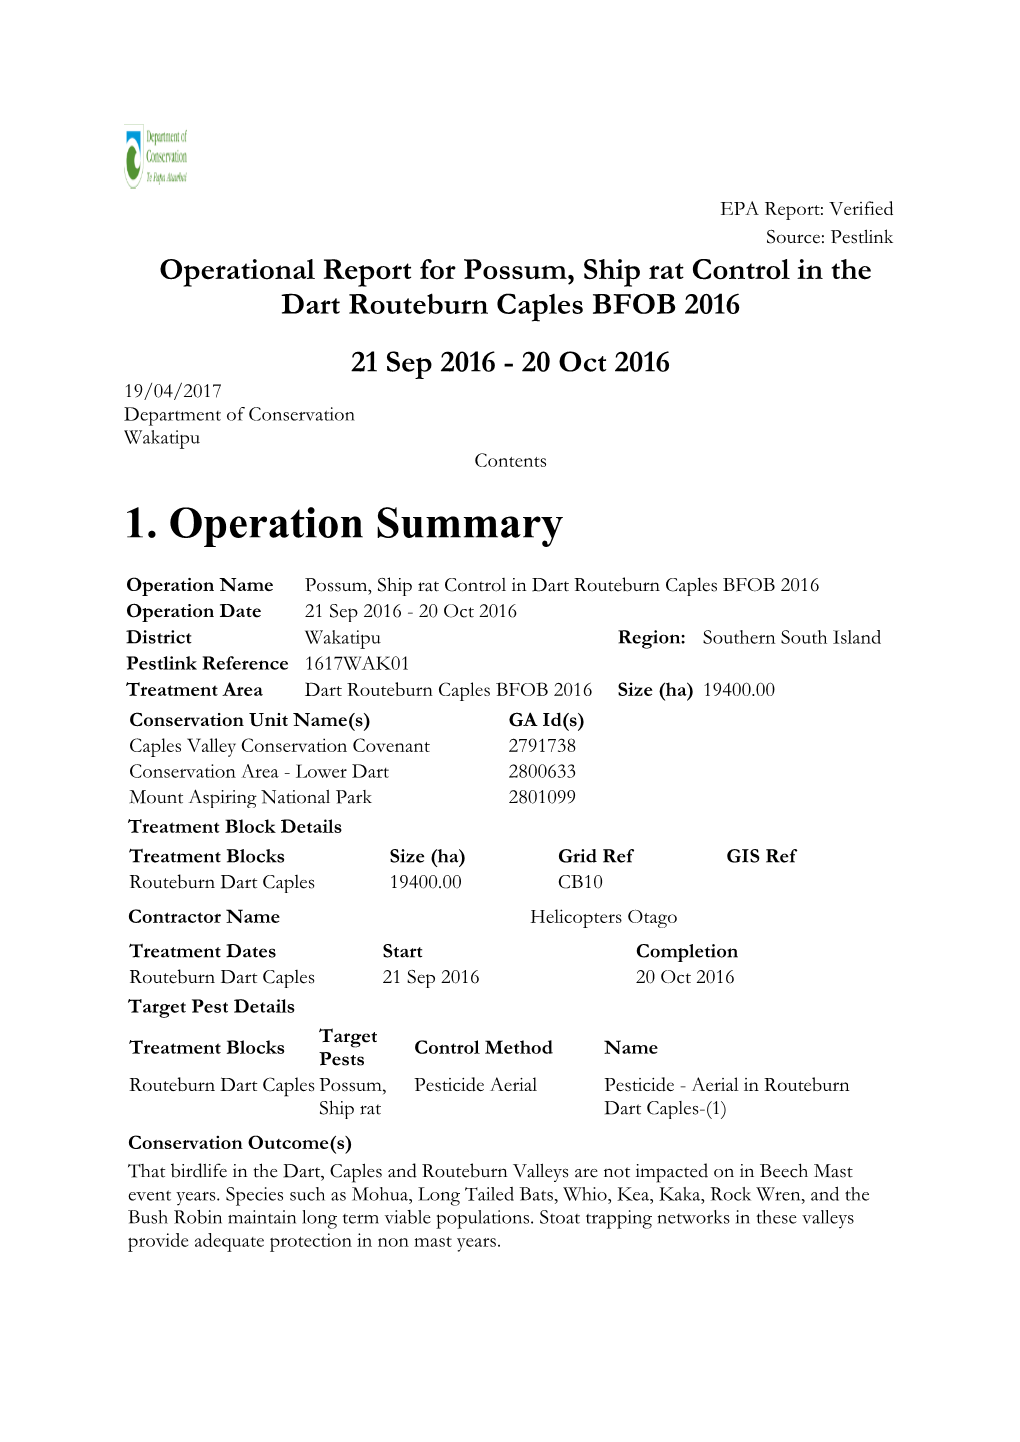 Operational Report for Possum, Ship Rat Control in the Dart Routeburn Caples BFOB 2016